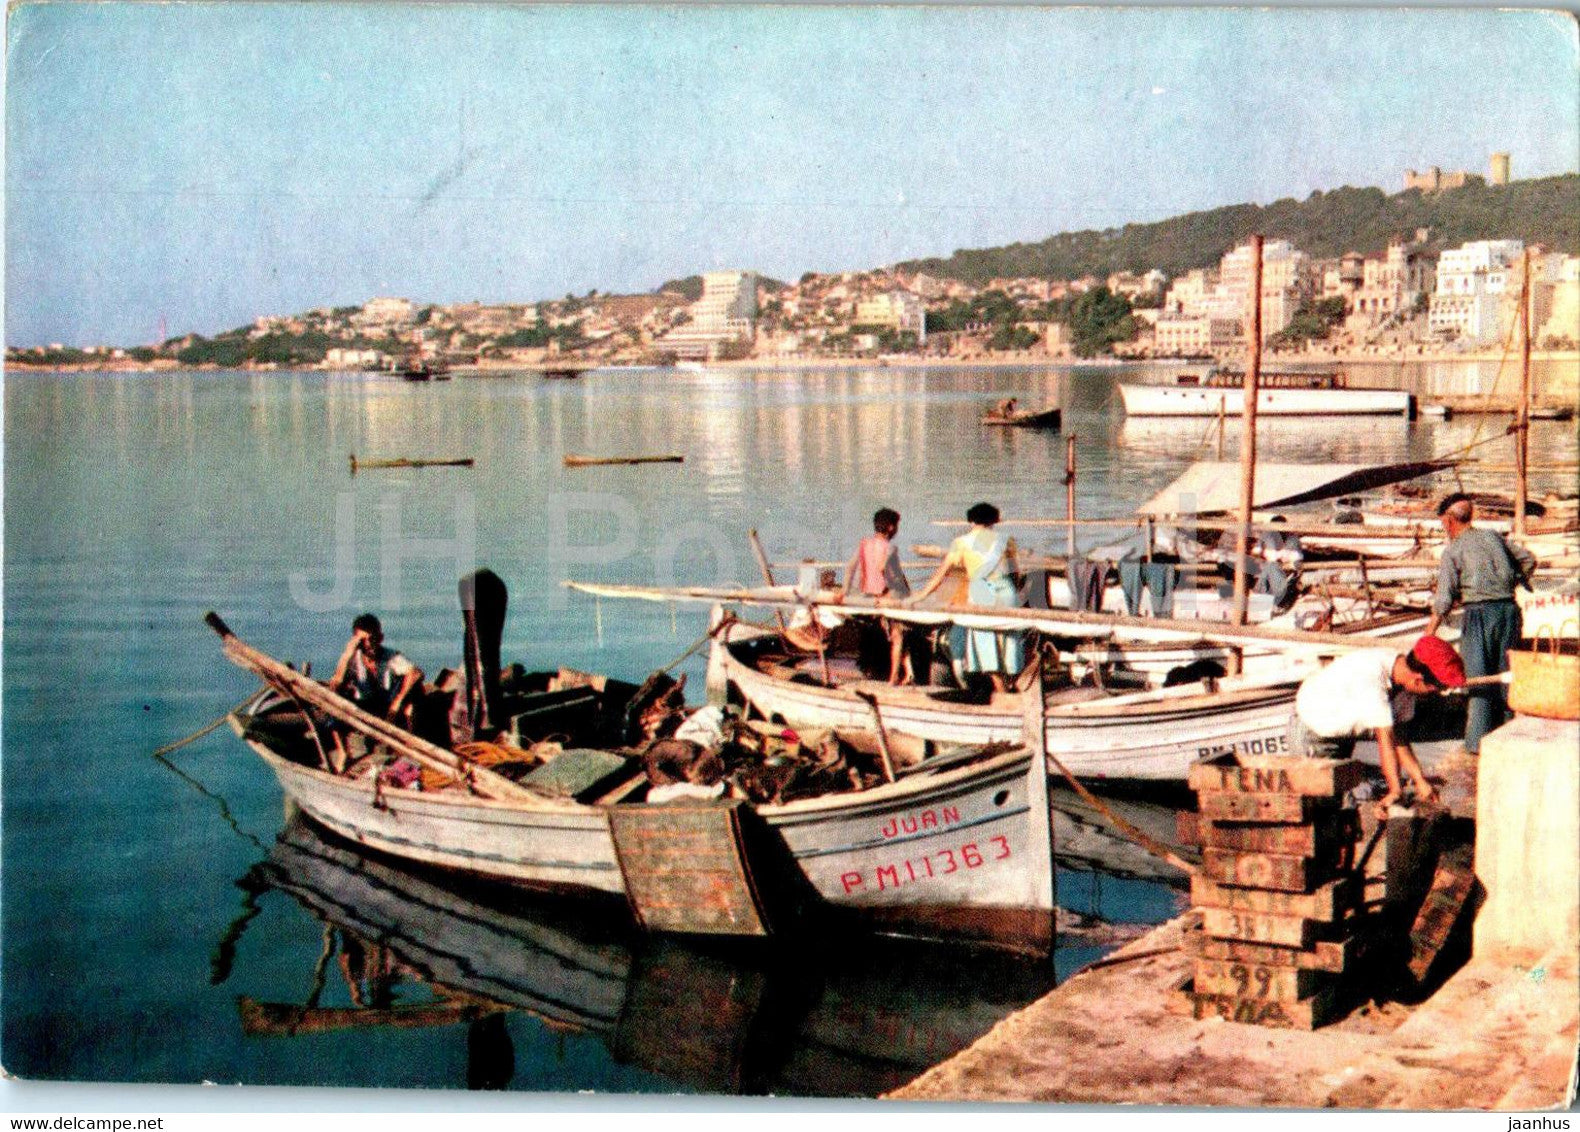 Palma de Mallorca - Detalle de la Bahia - boat - old postcard - 1093 - Spain - unused - JH Postcards